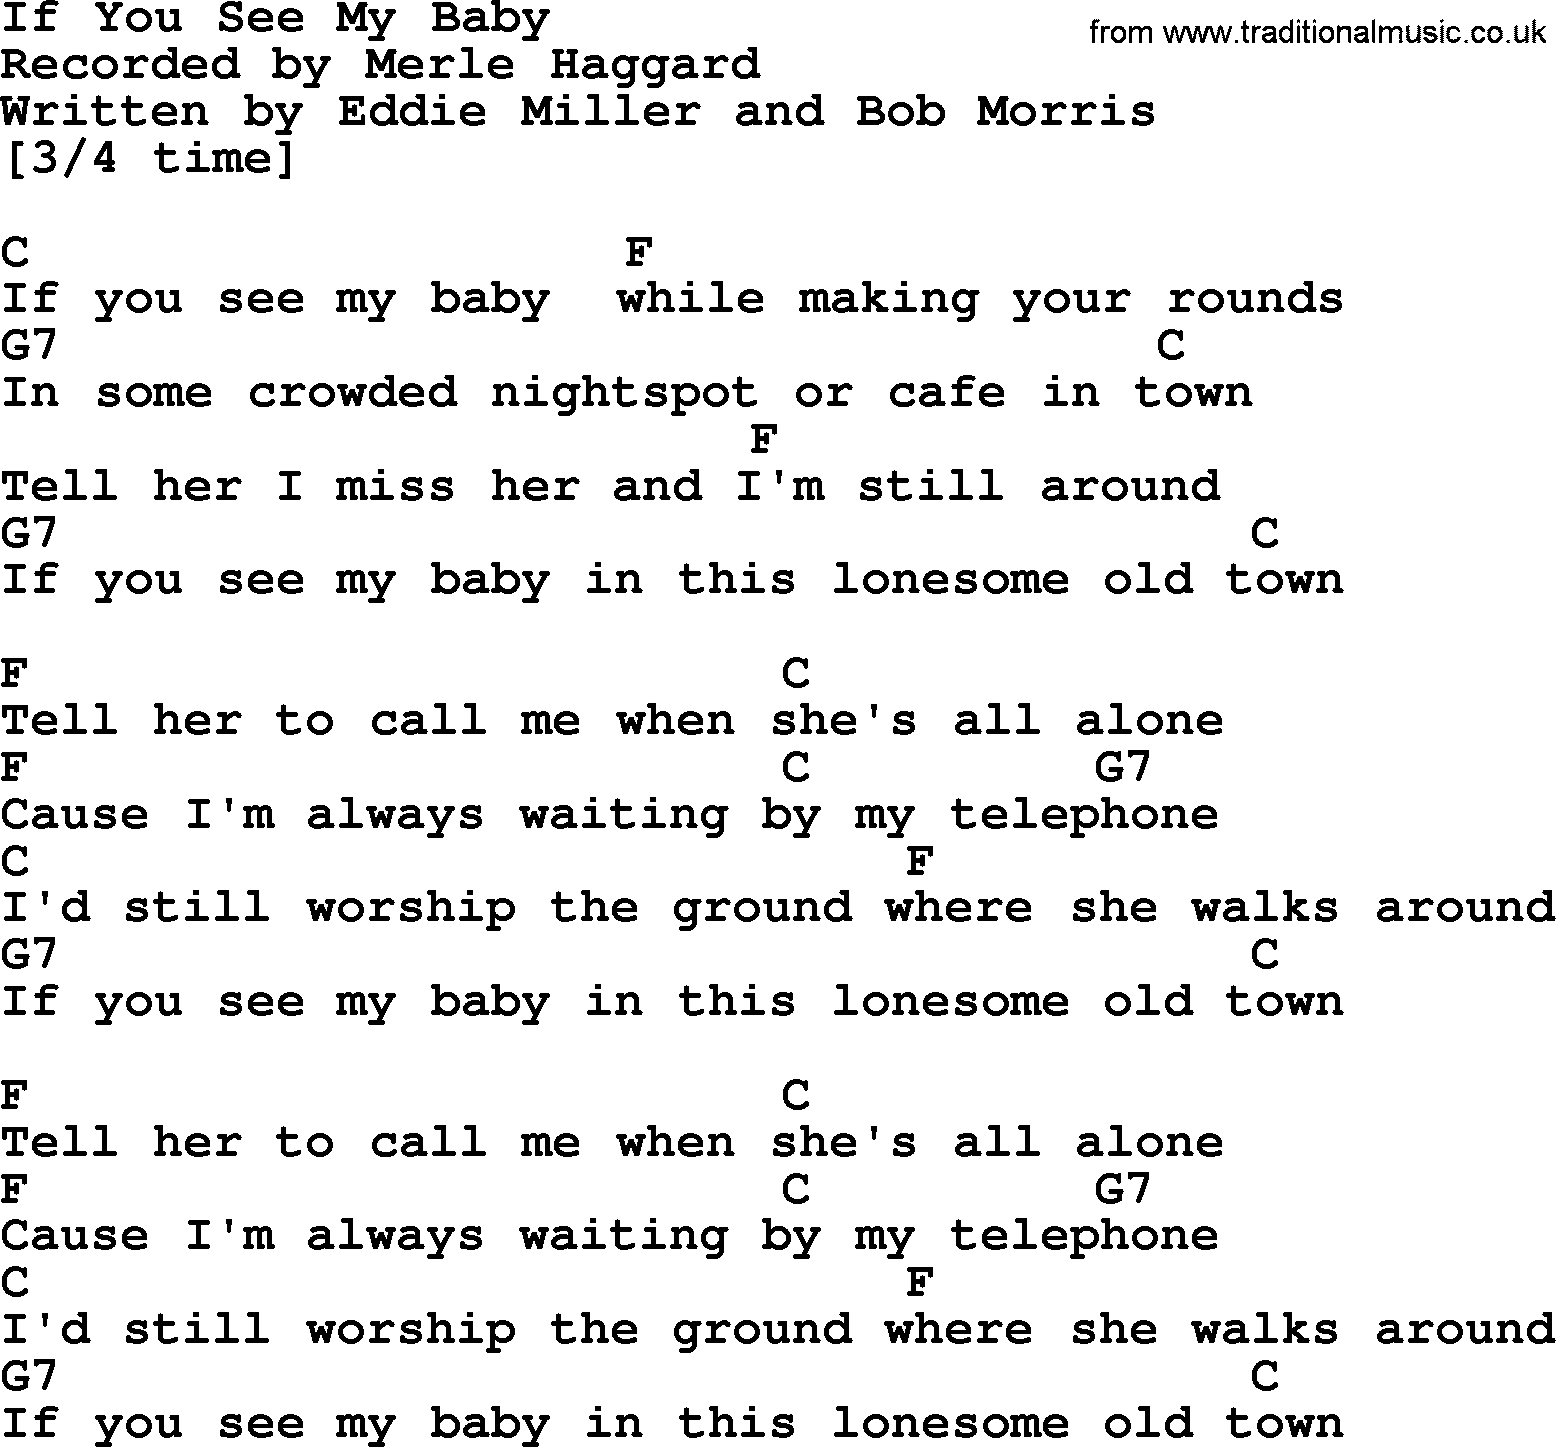 Merle Haggard song: If You See My Baby, lyrics and chords